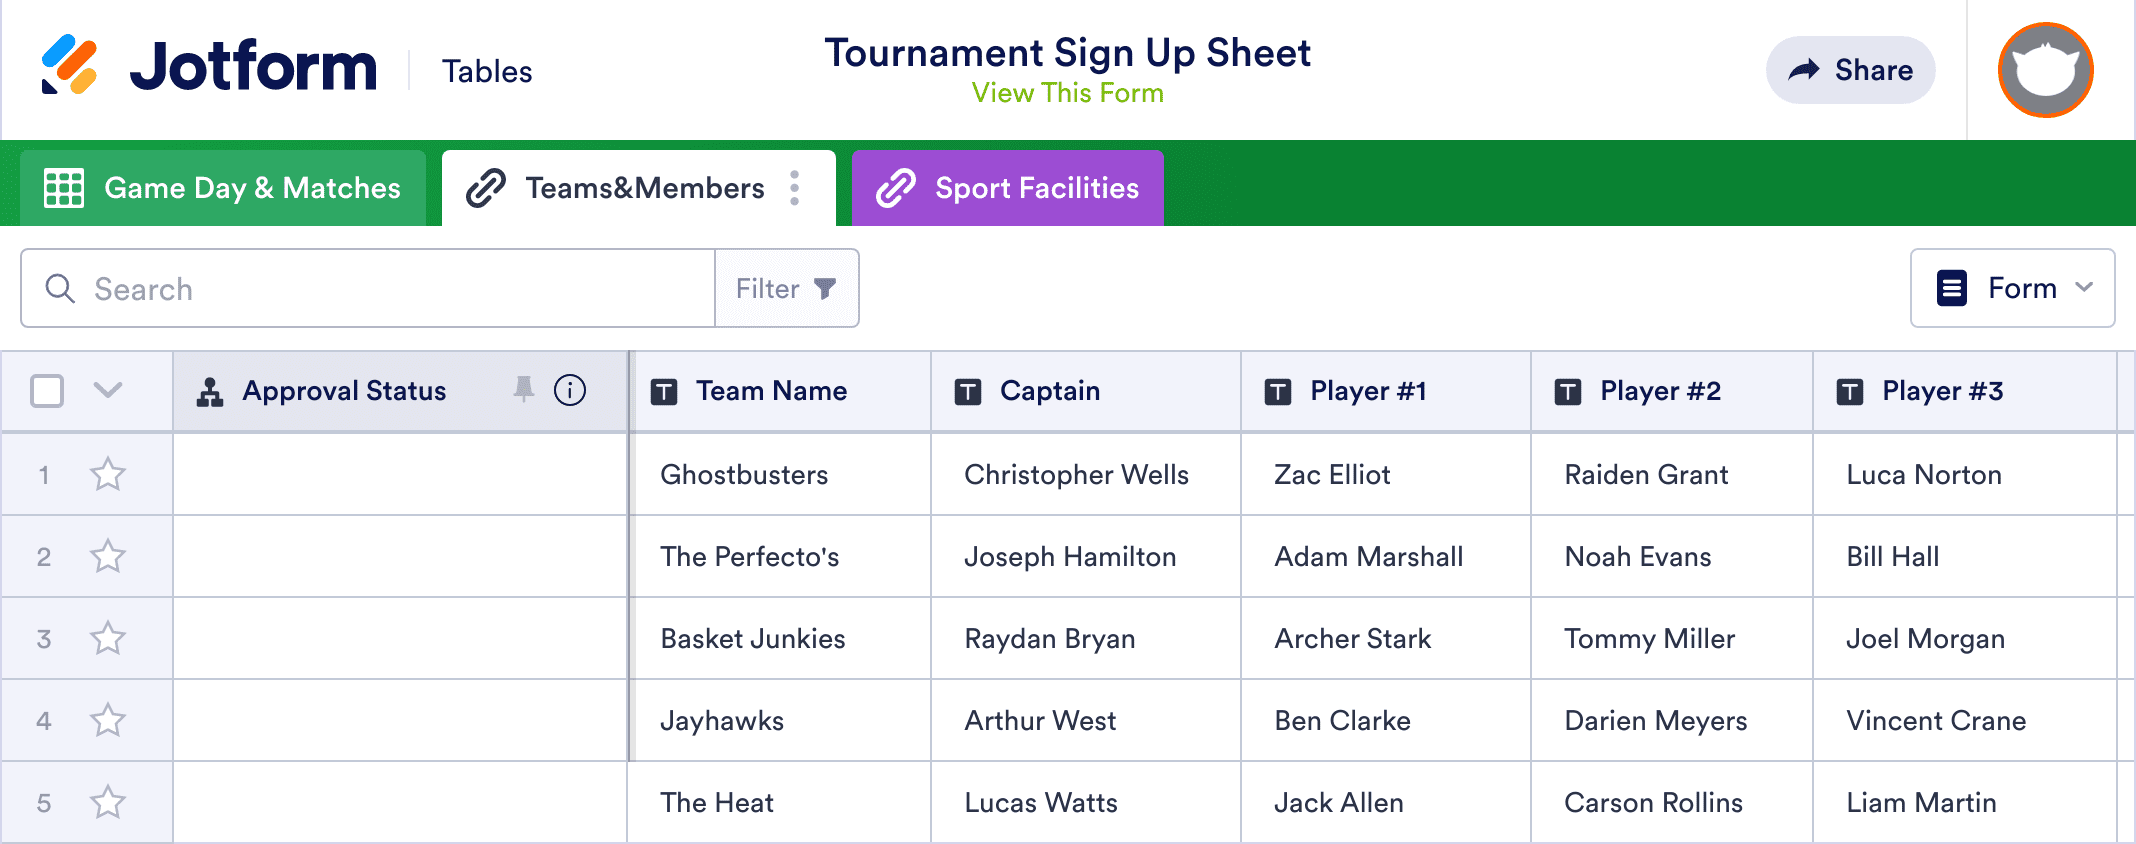 Tournament Sign Up Sheet